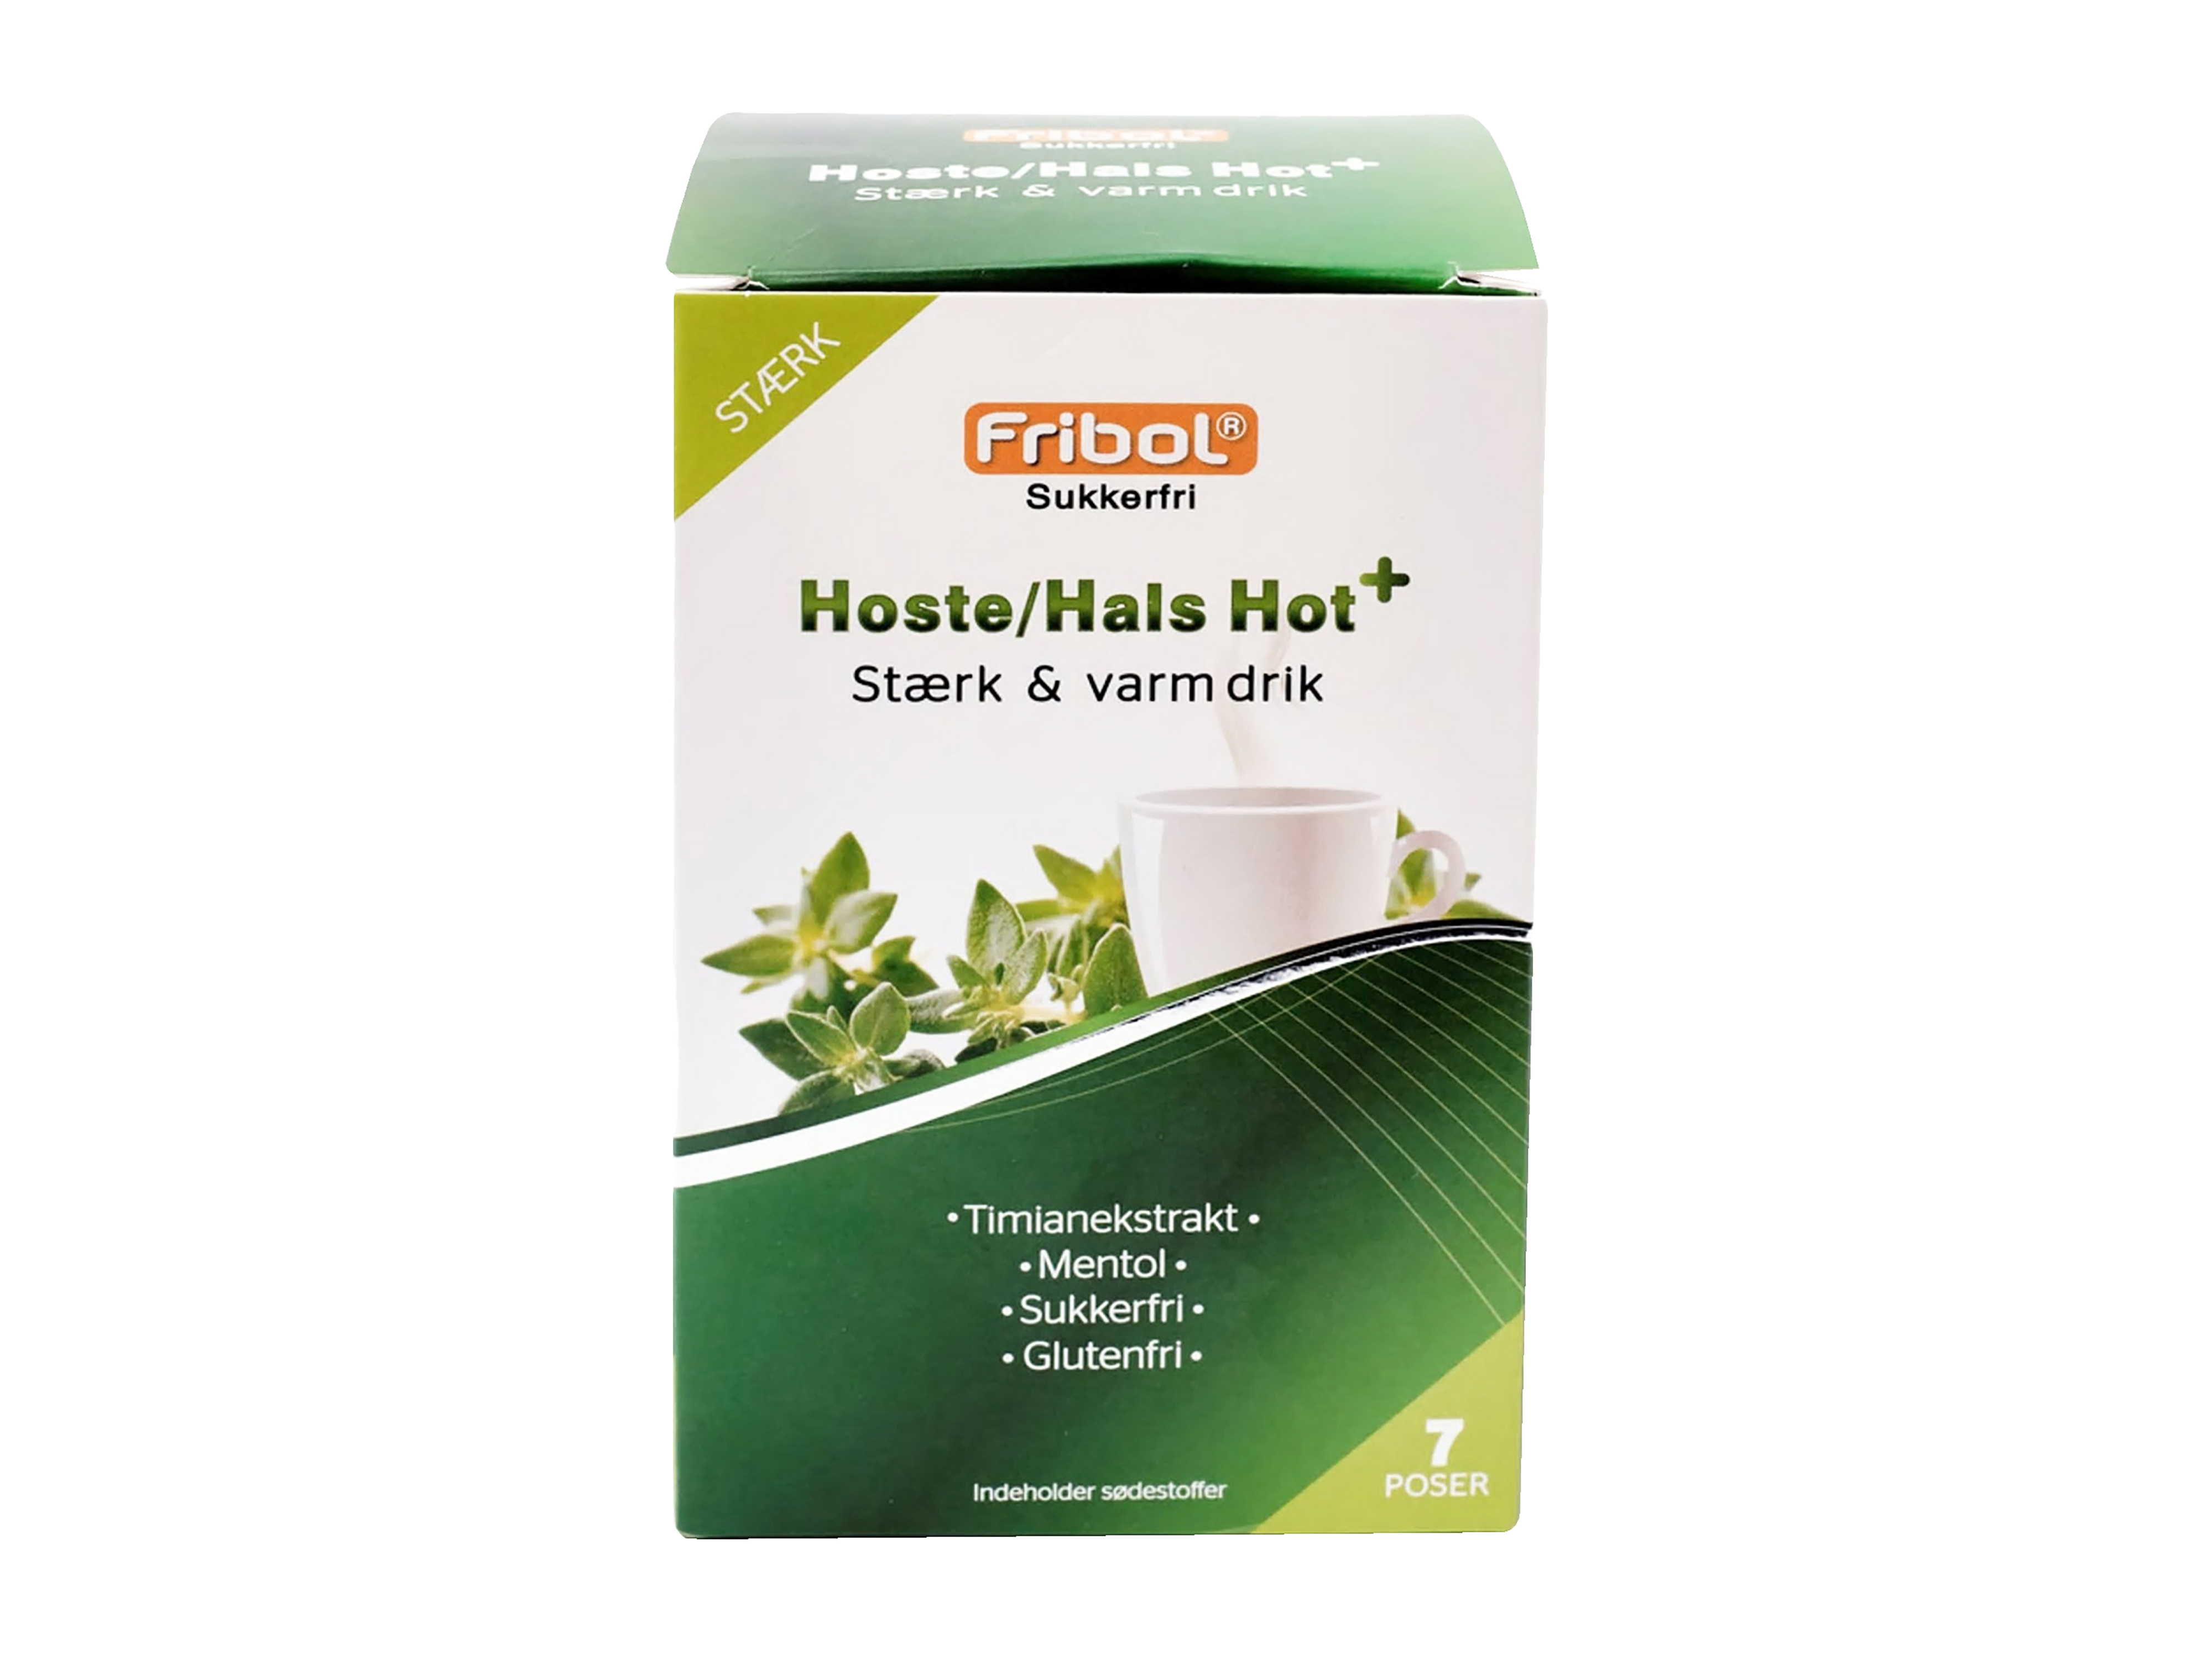 Fribol Varmdrikk Hoste/Hals Hot+, 7 poser a 6 gram